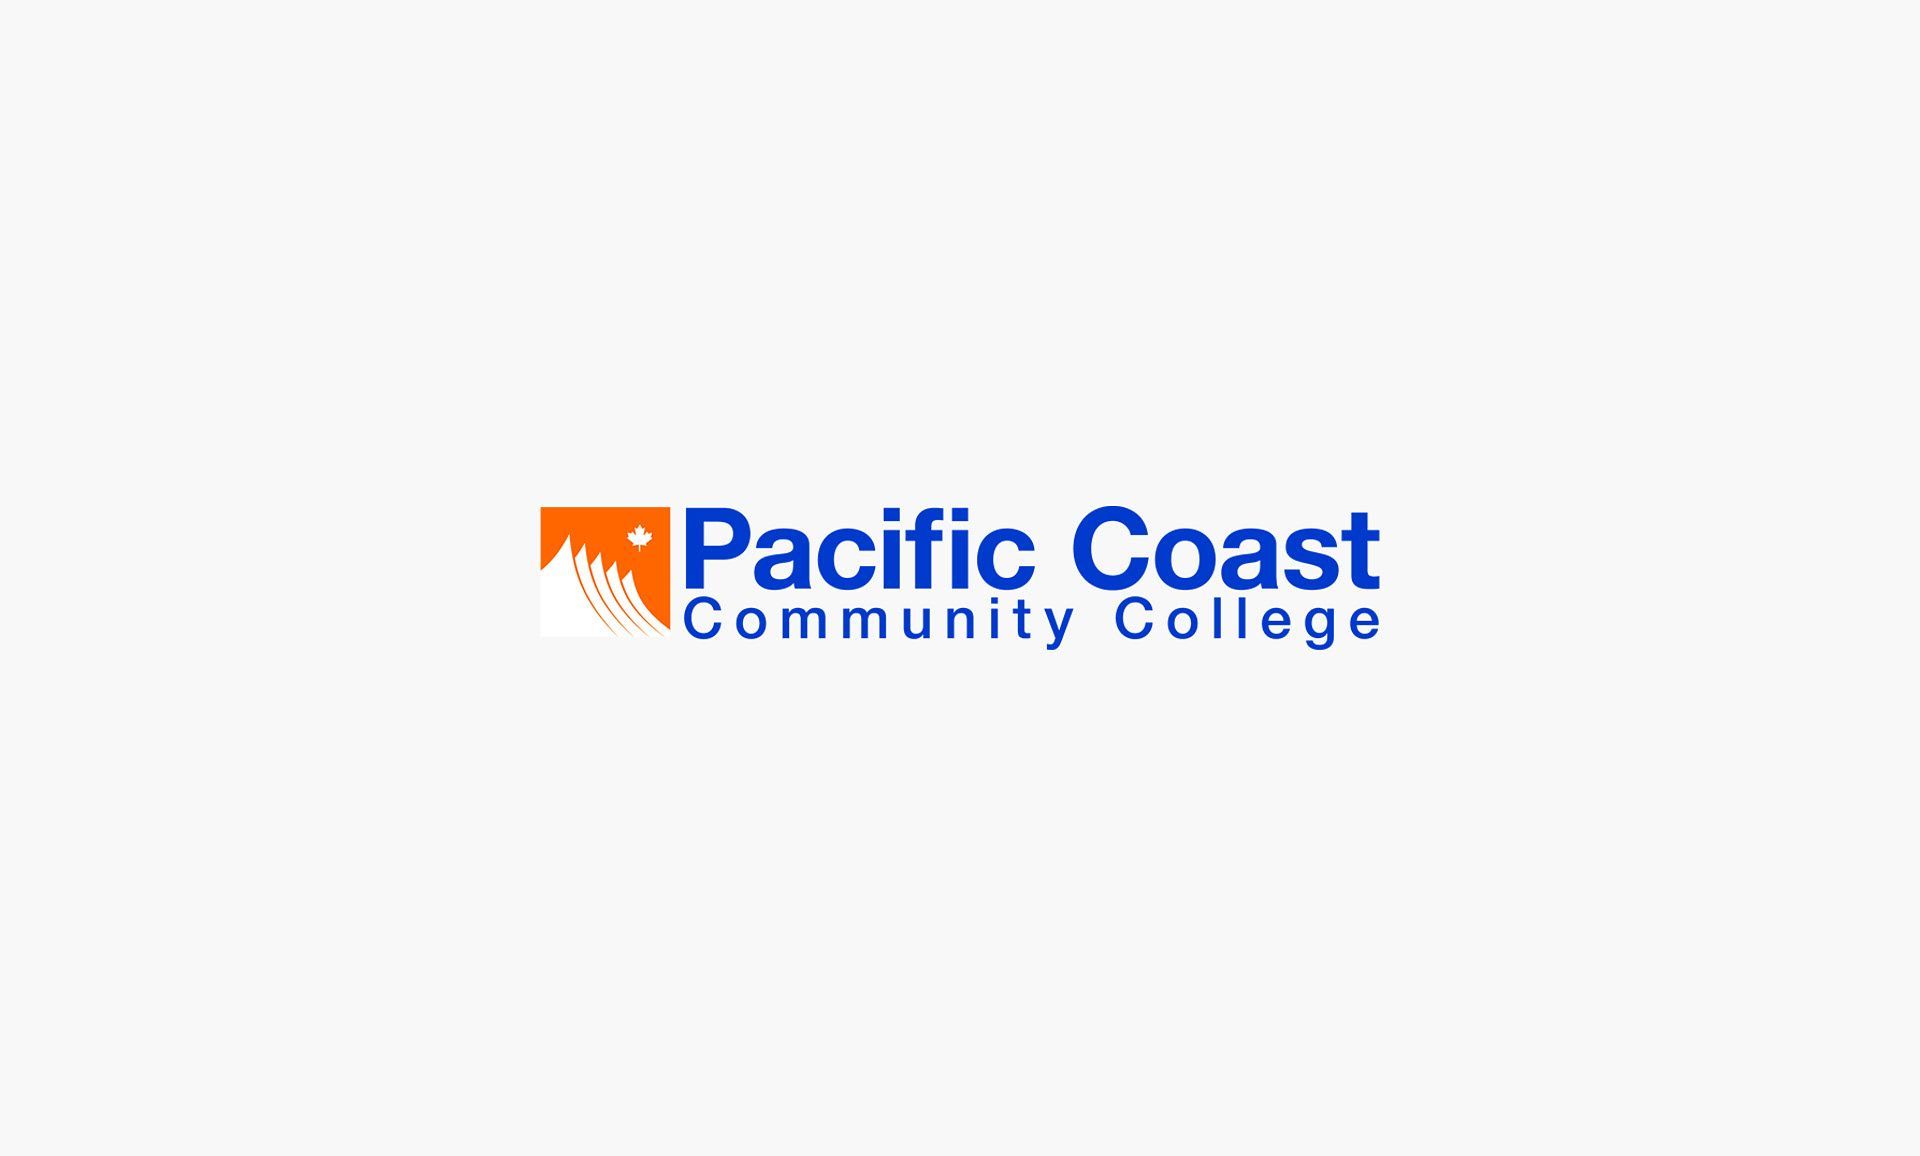 Pacific Coast Community College